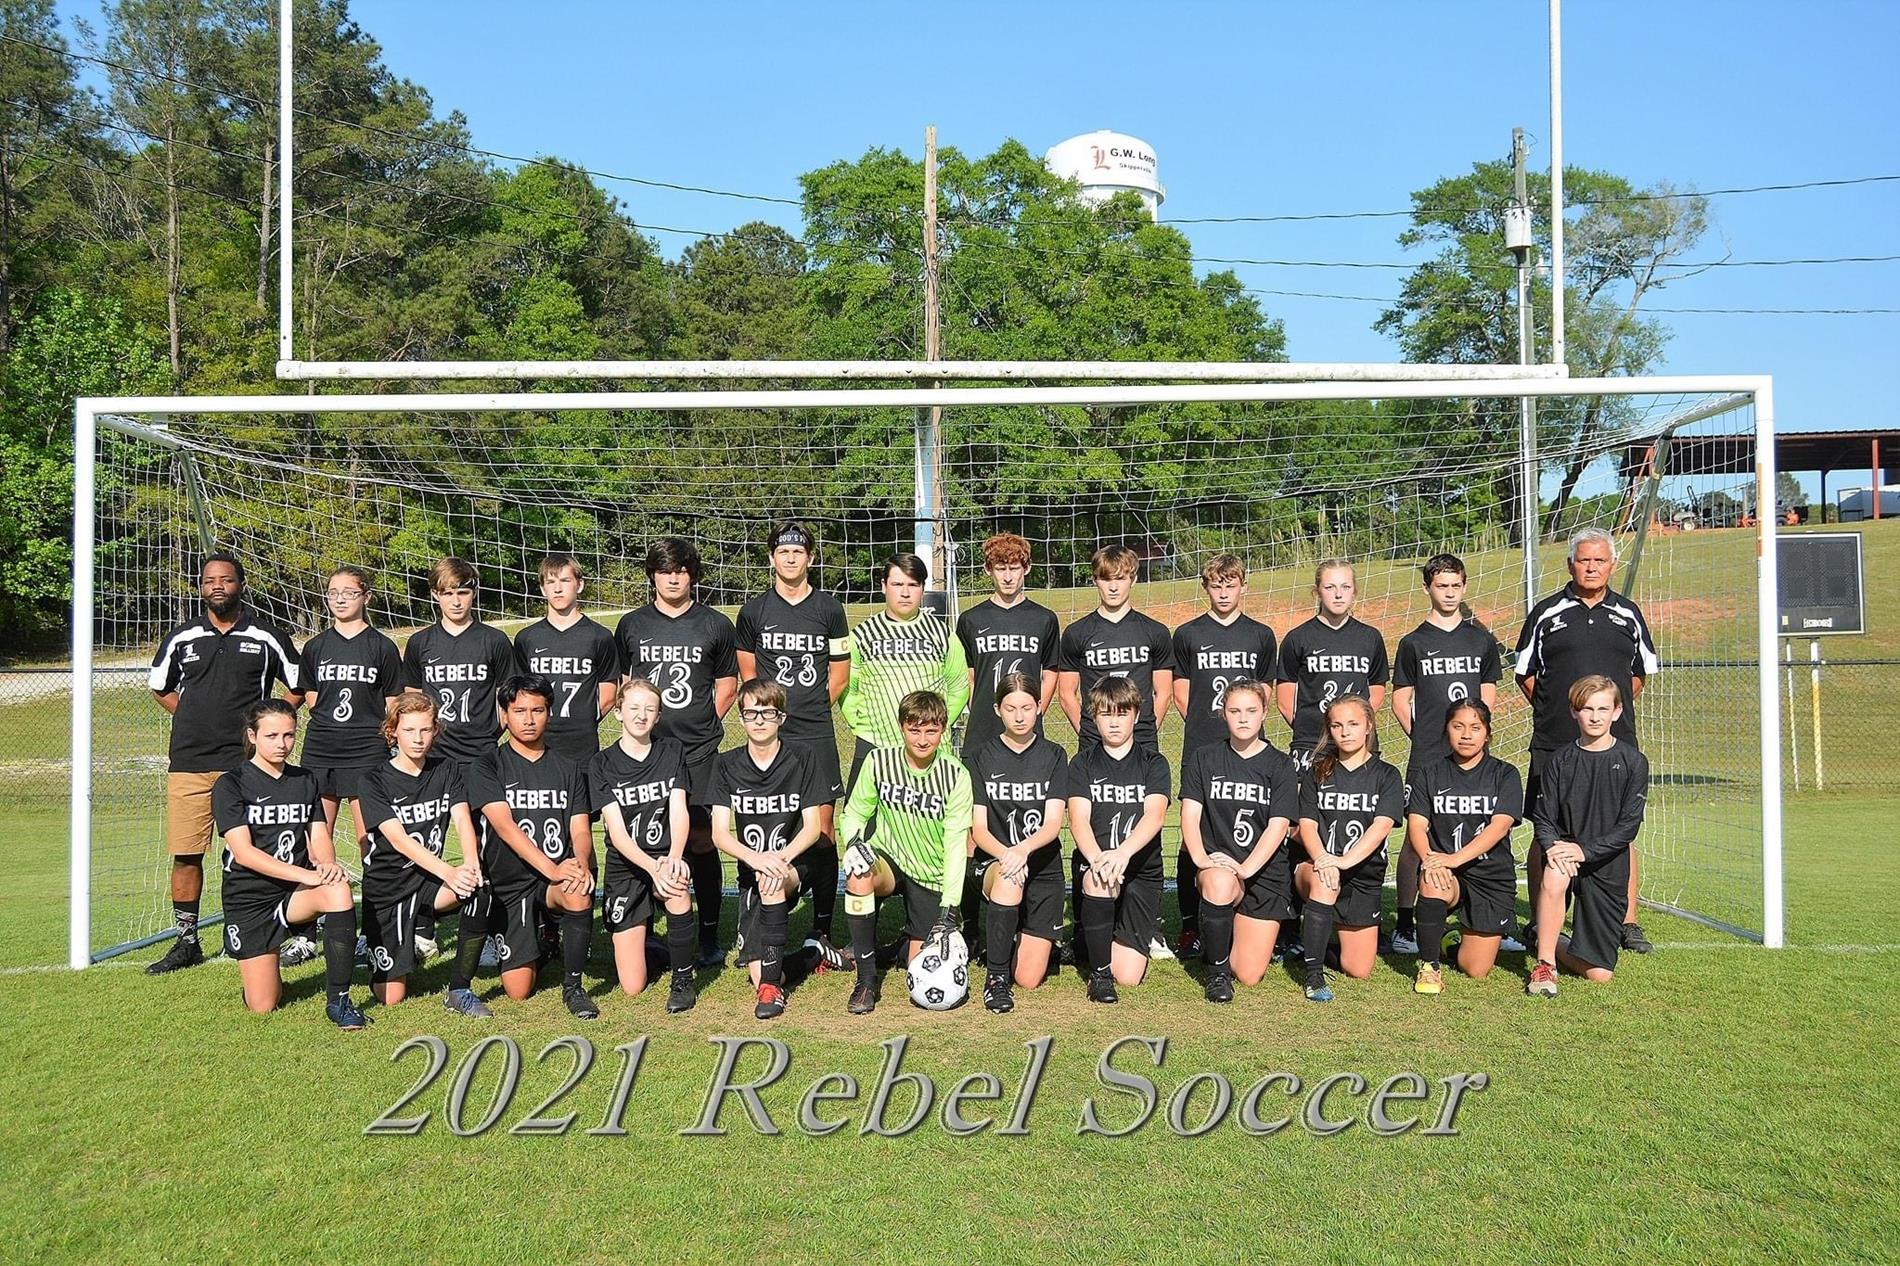 Rebel Soccer Team Picture